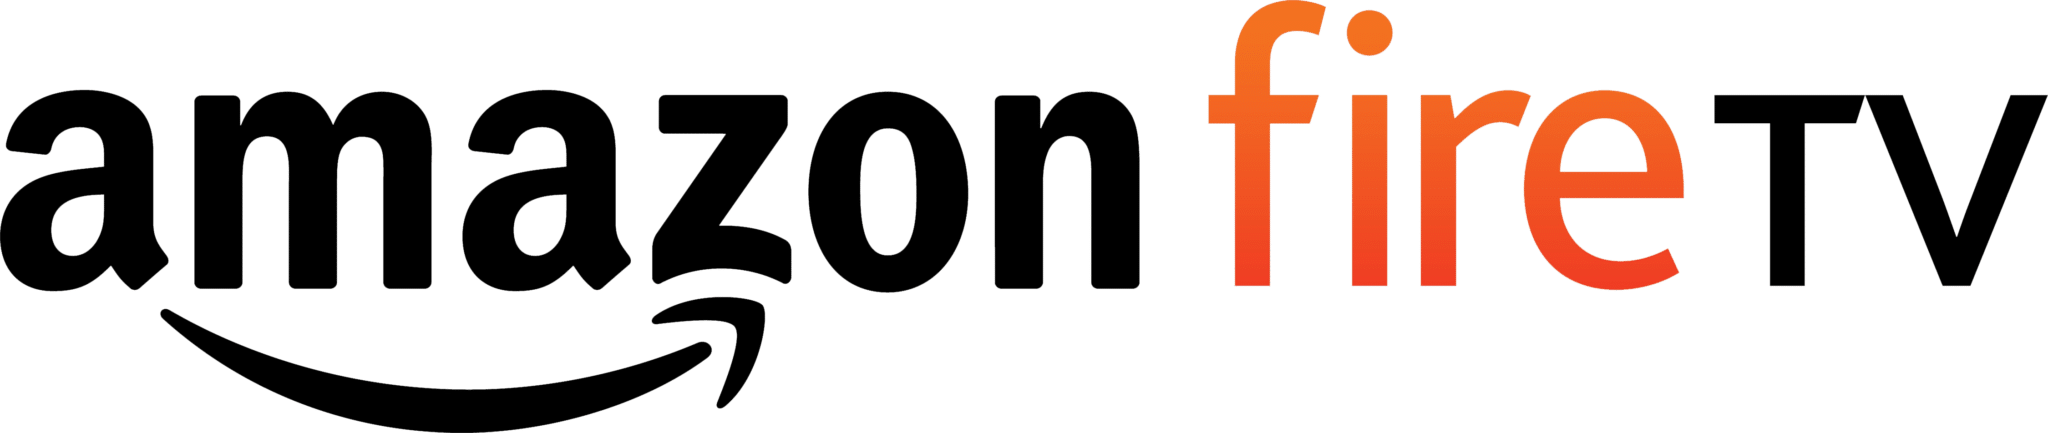 Amazon Fire TV логотип